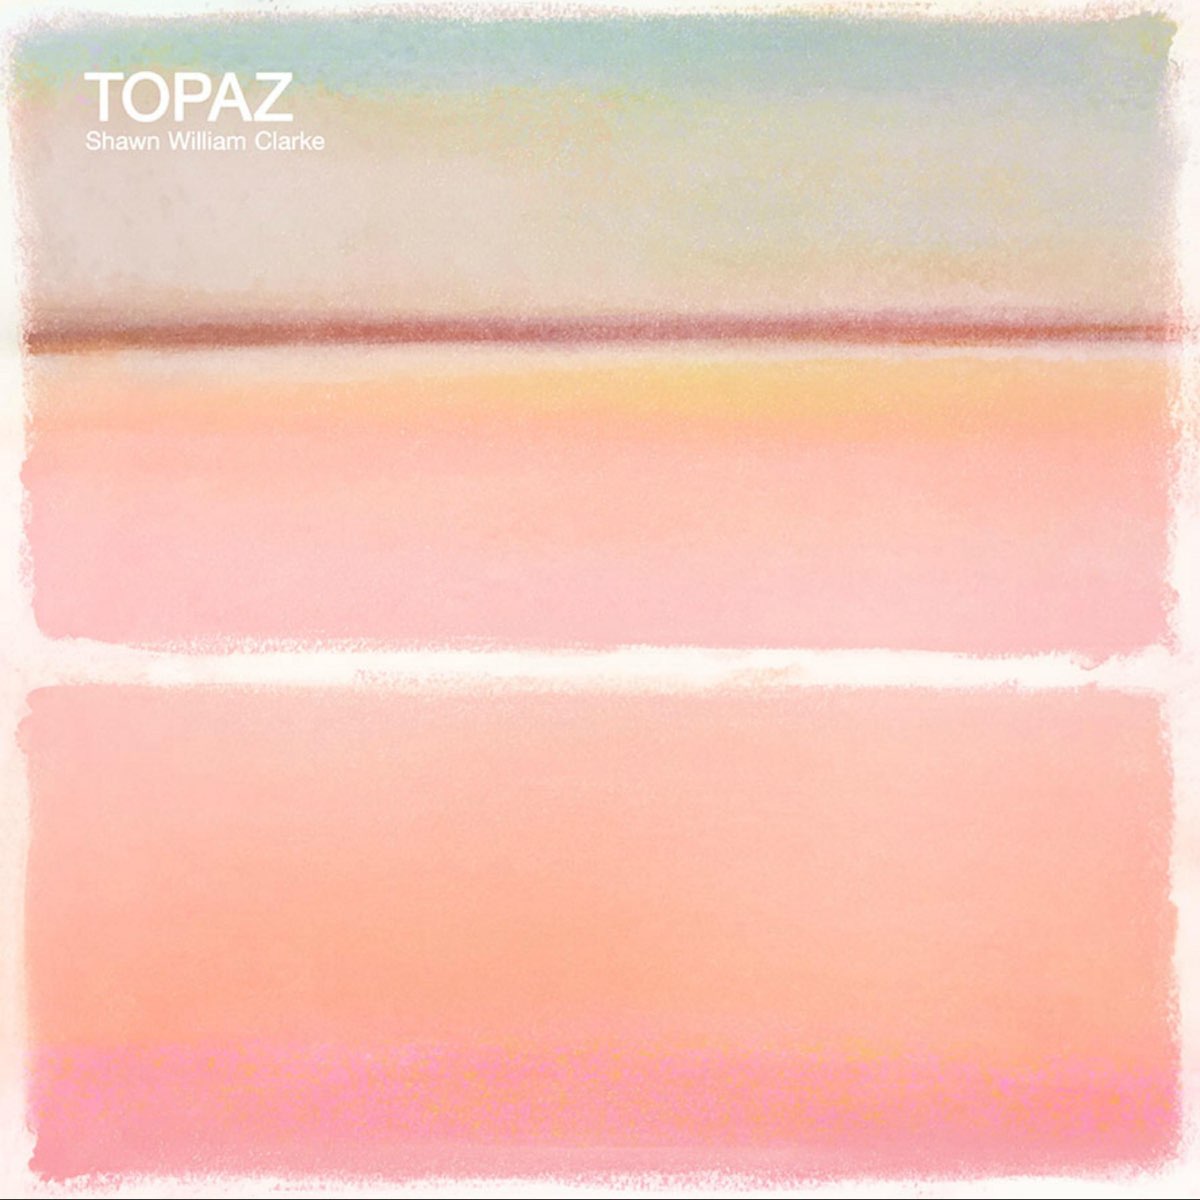 Topaz by Shawn William Clarke on Apple Music